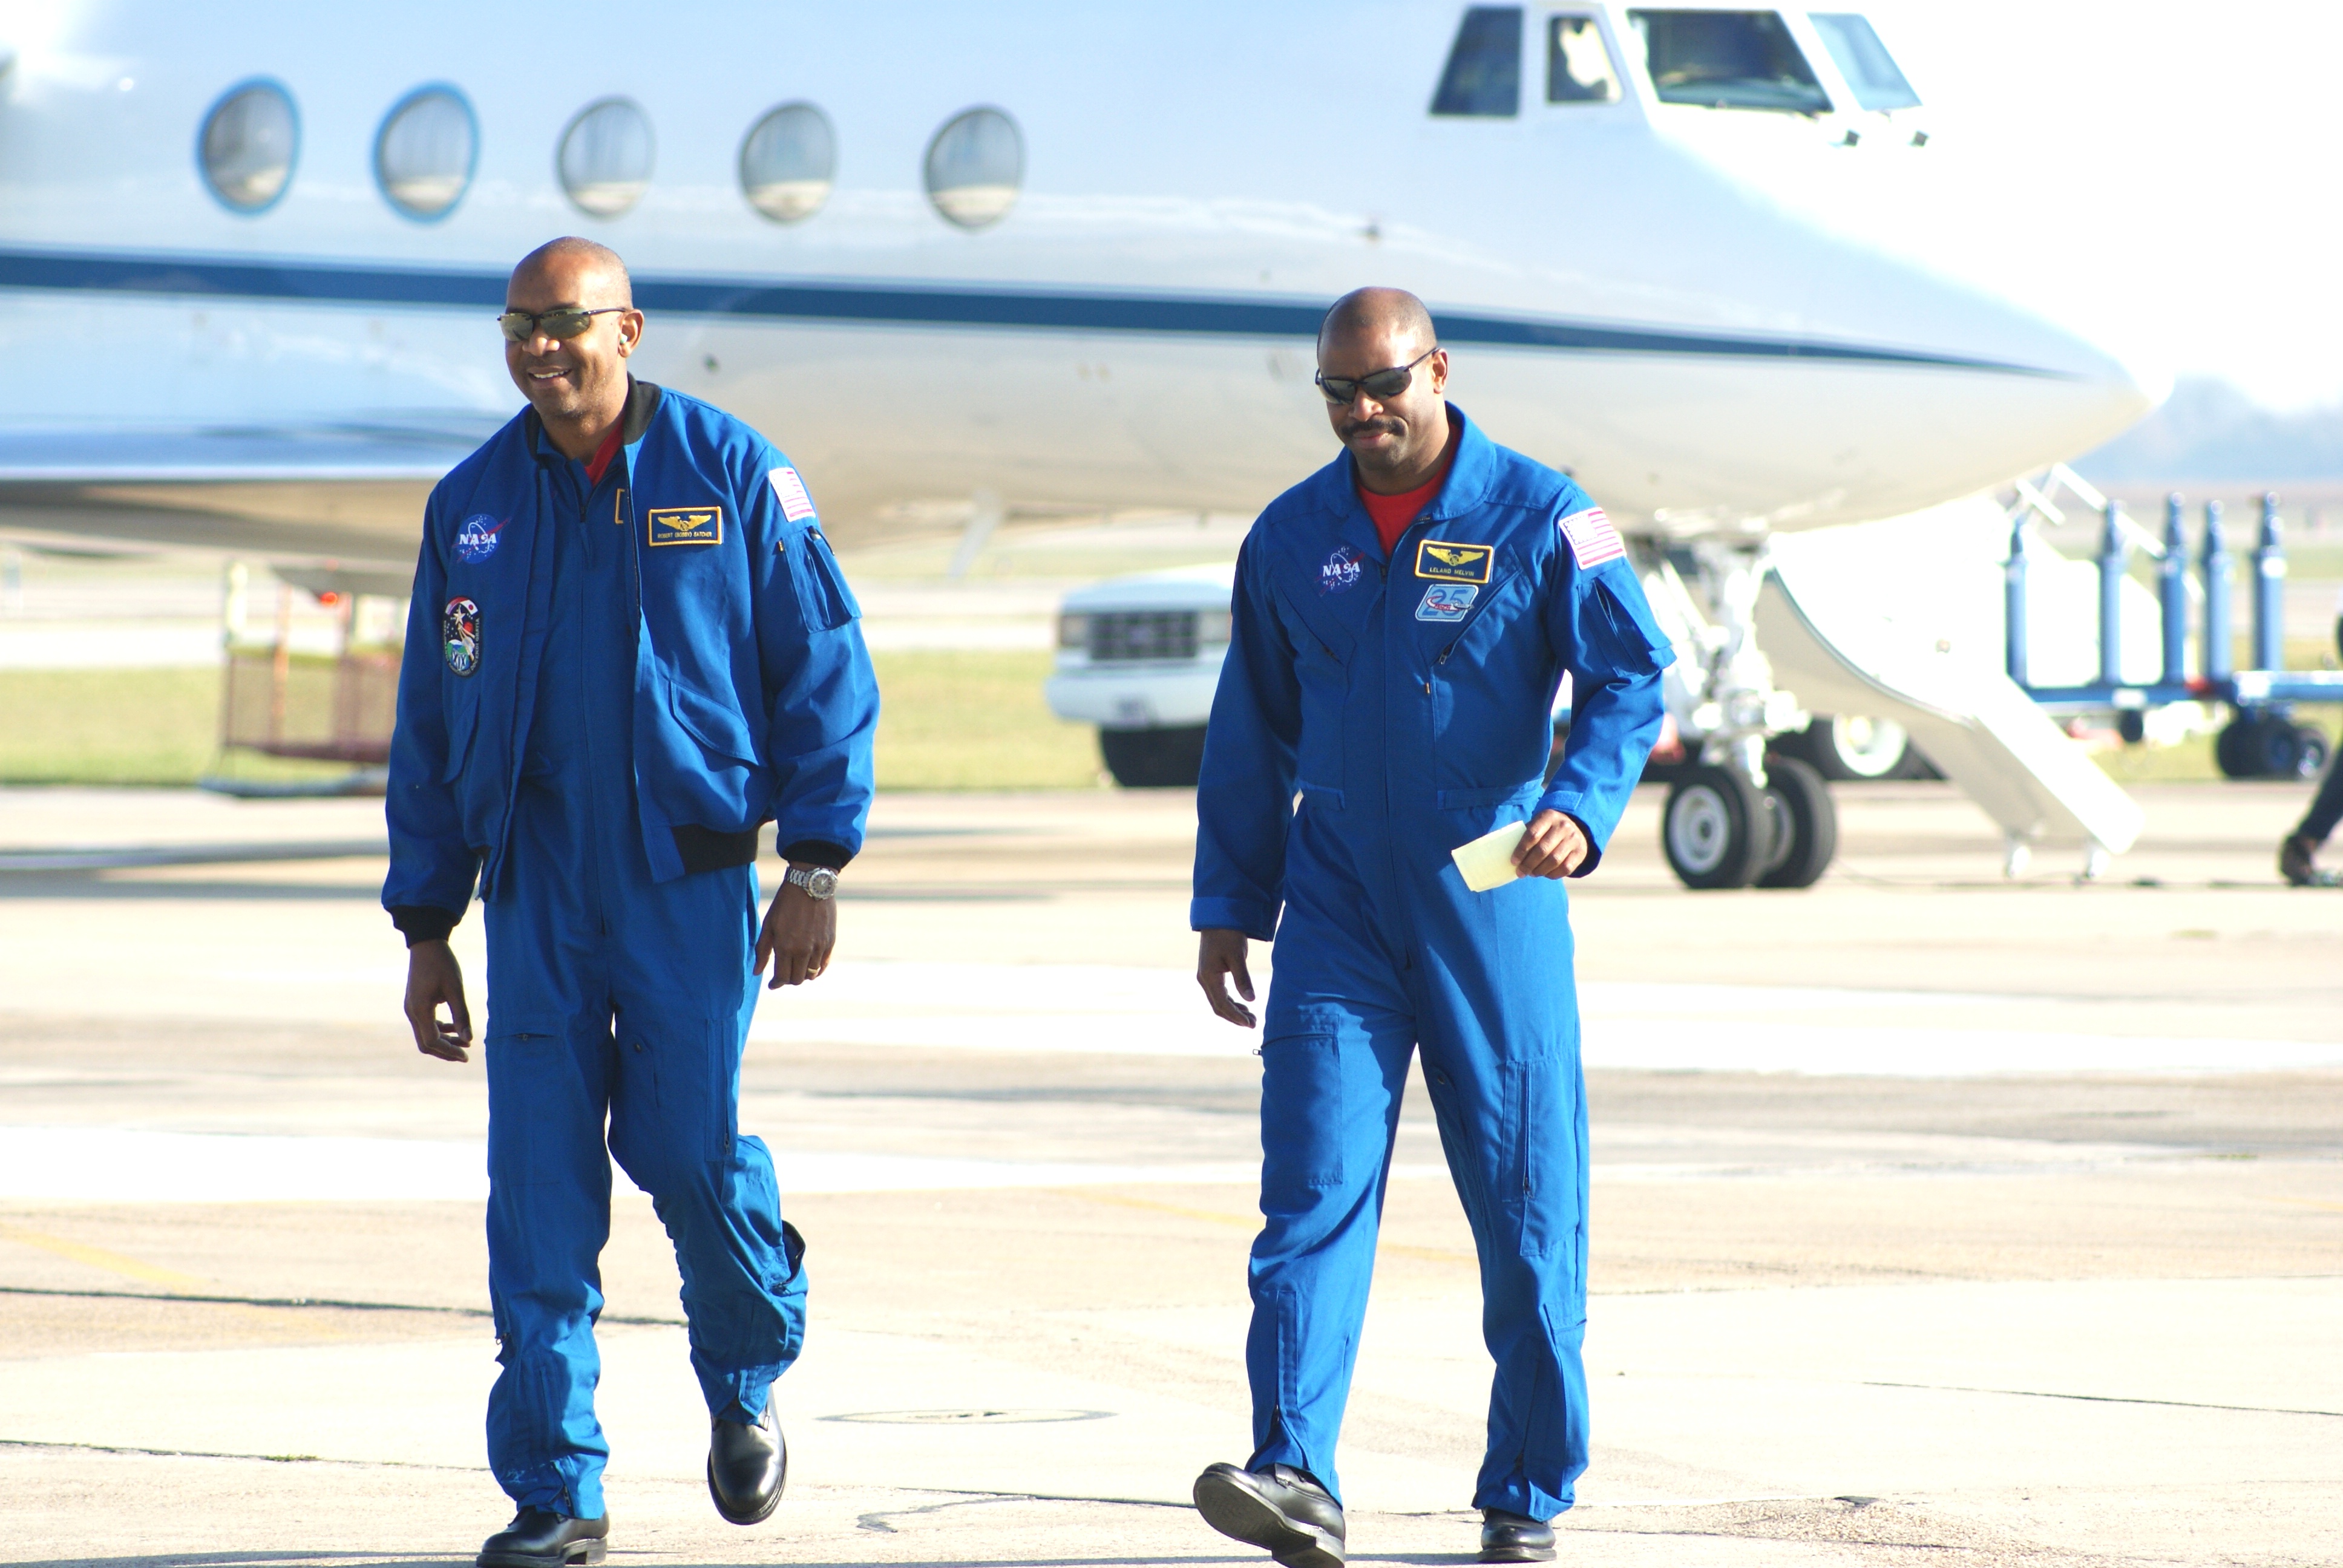 Leland Melvin and Dr. Robert Satcher, two Black NASA astronauts walk on the tarmac